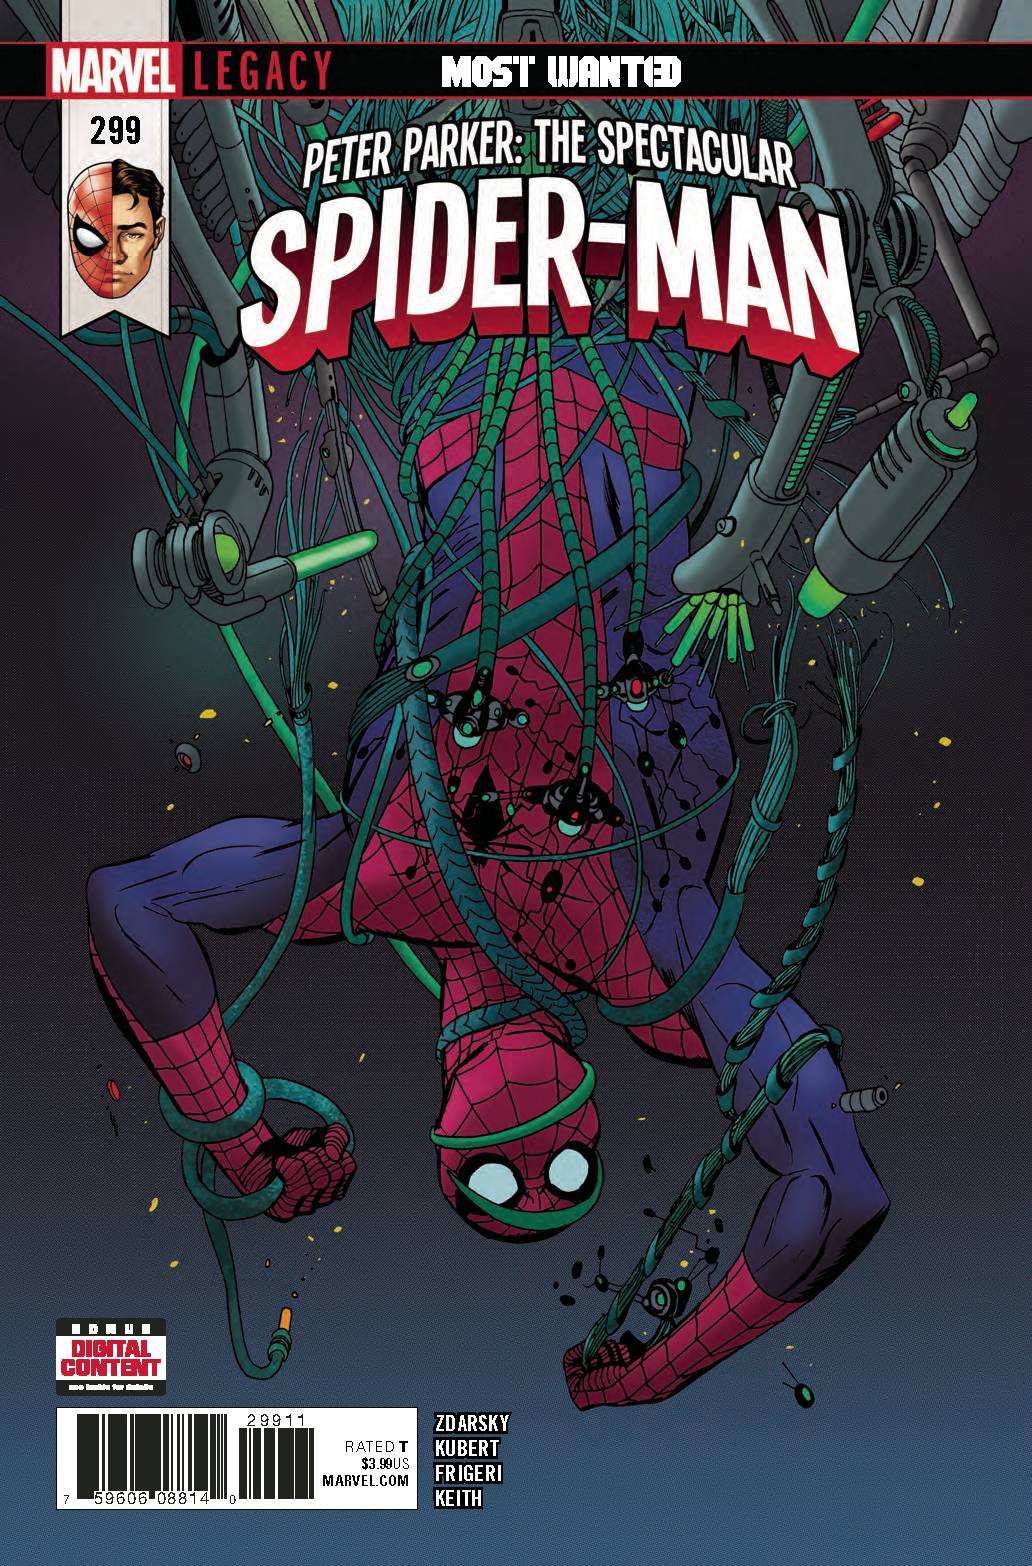 PETER PARKER SPECTACULAR SPIDER-MAN #299 LEG